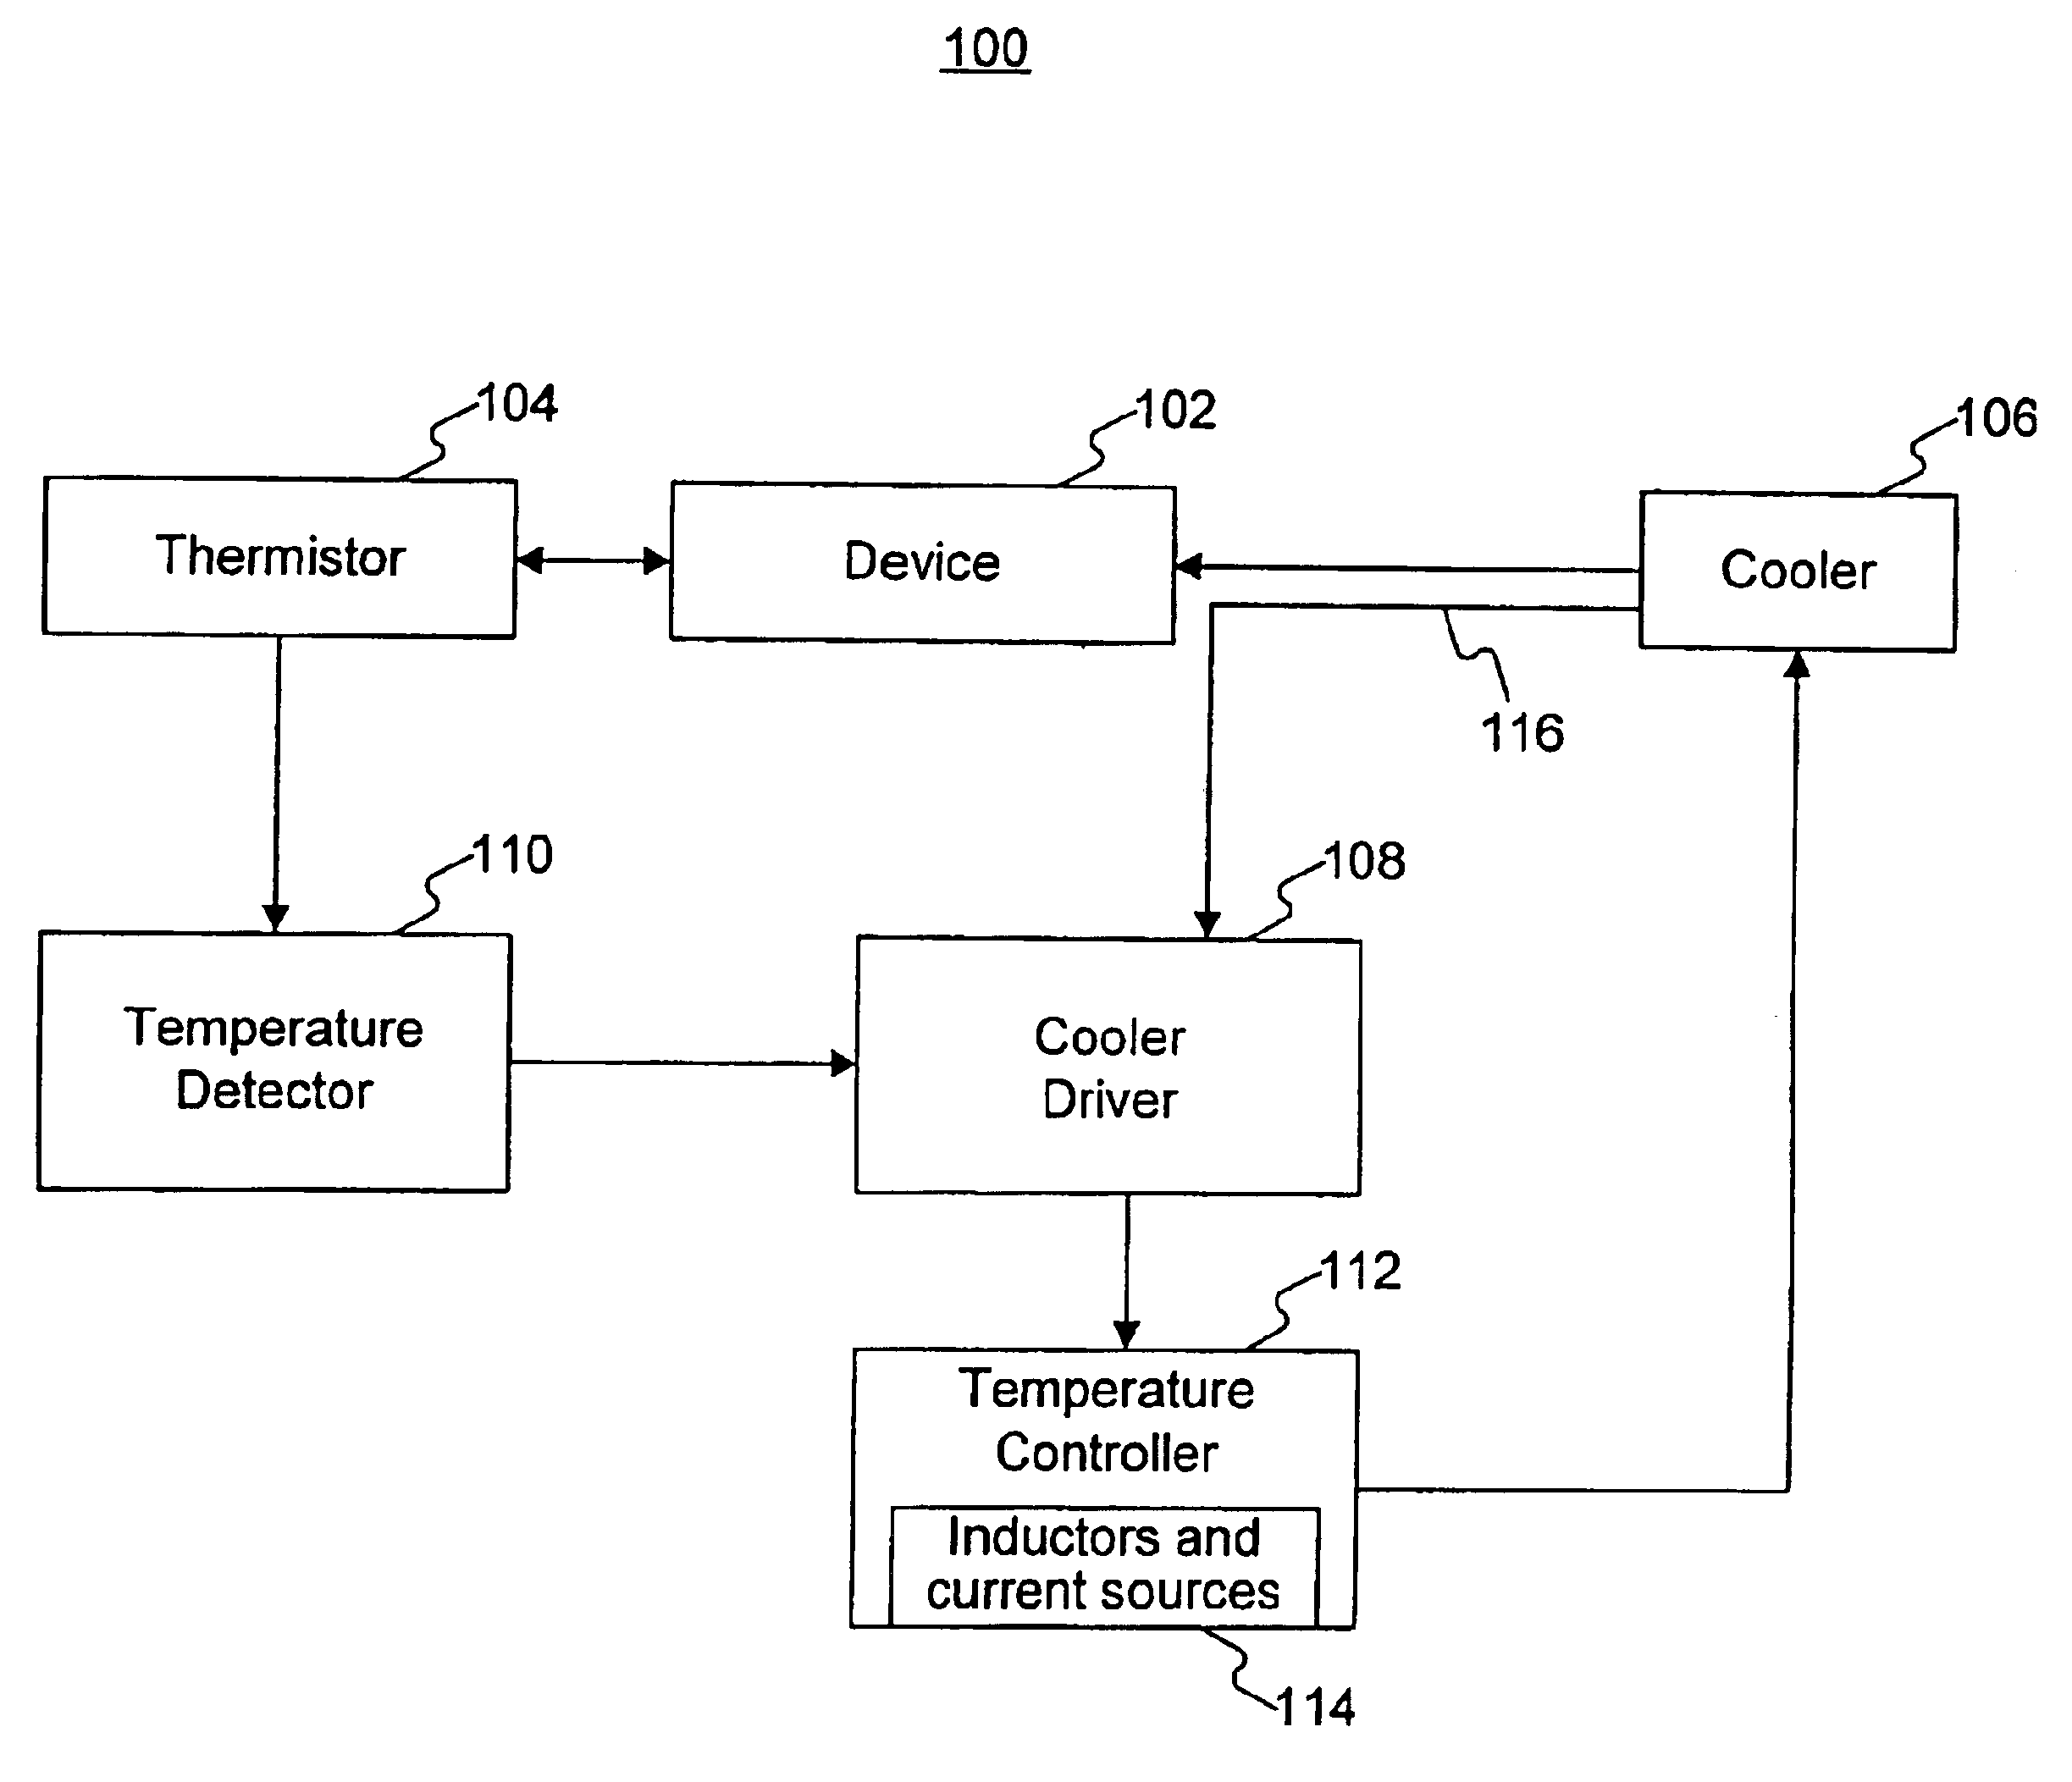 Temperature controller module